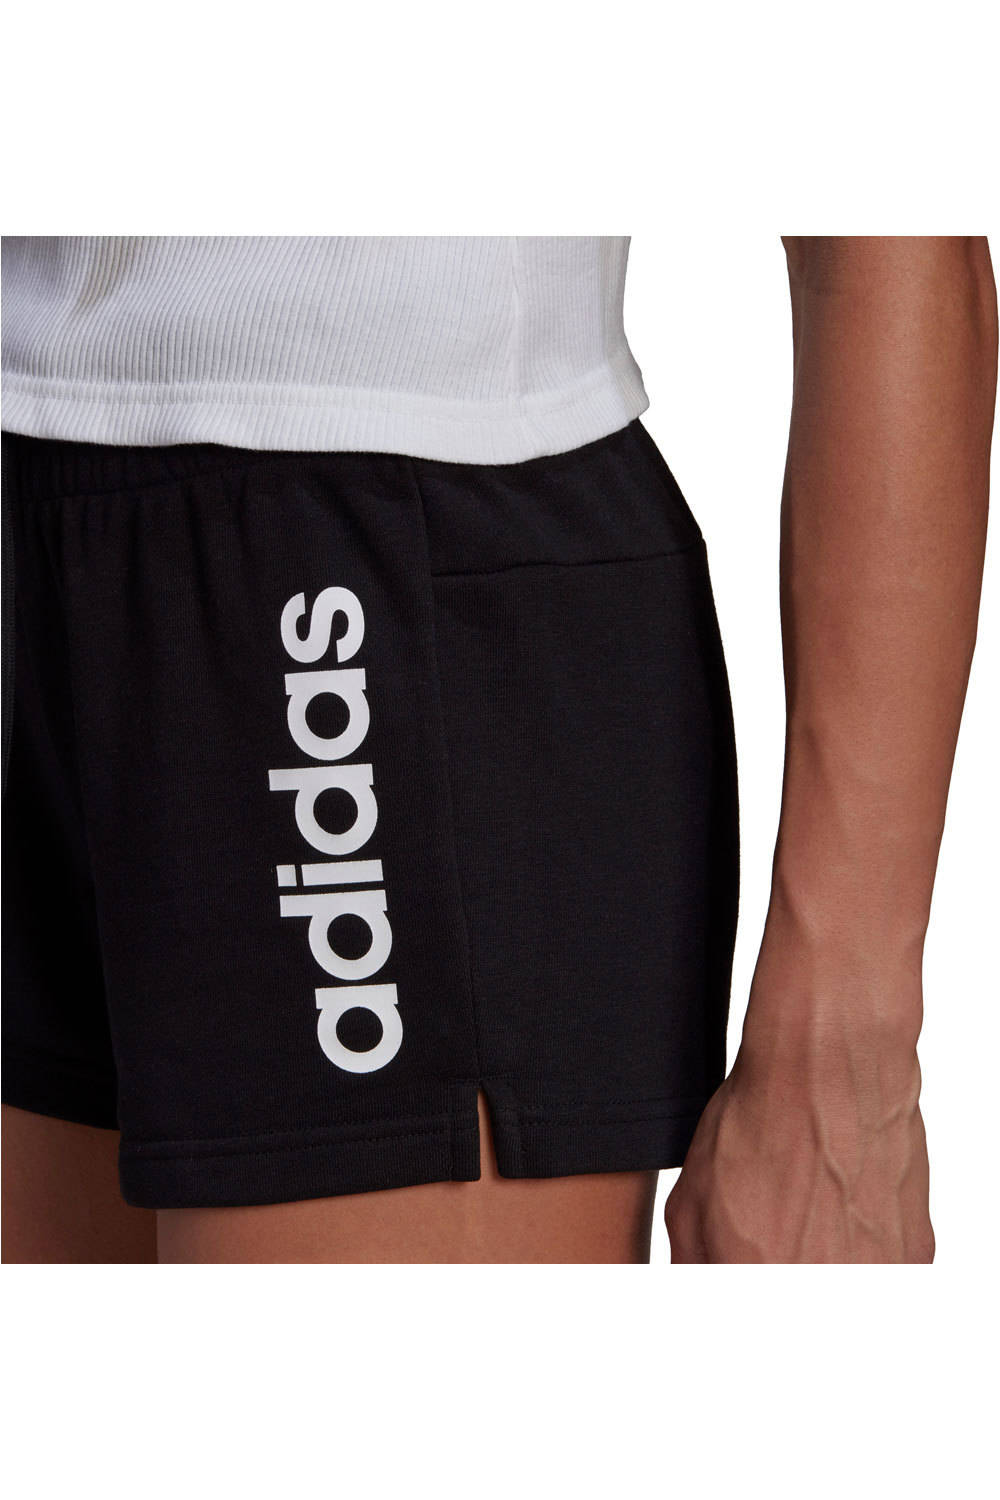 adidas pantalón corto deporte mujer Essentials Slim Logo vista detalle